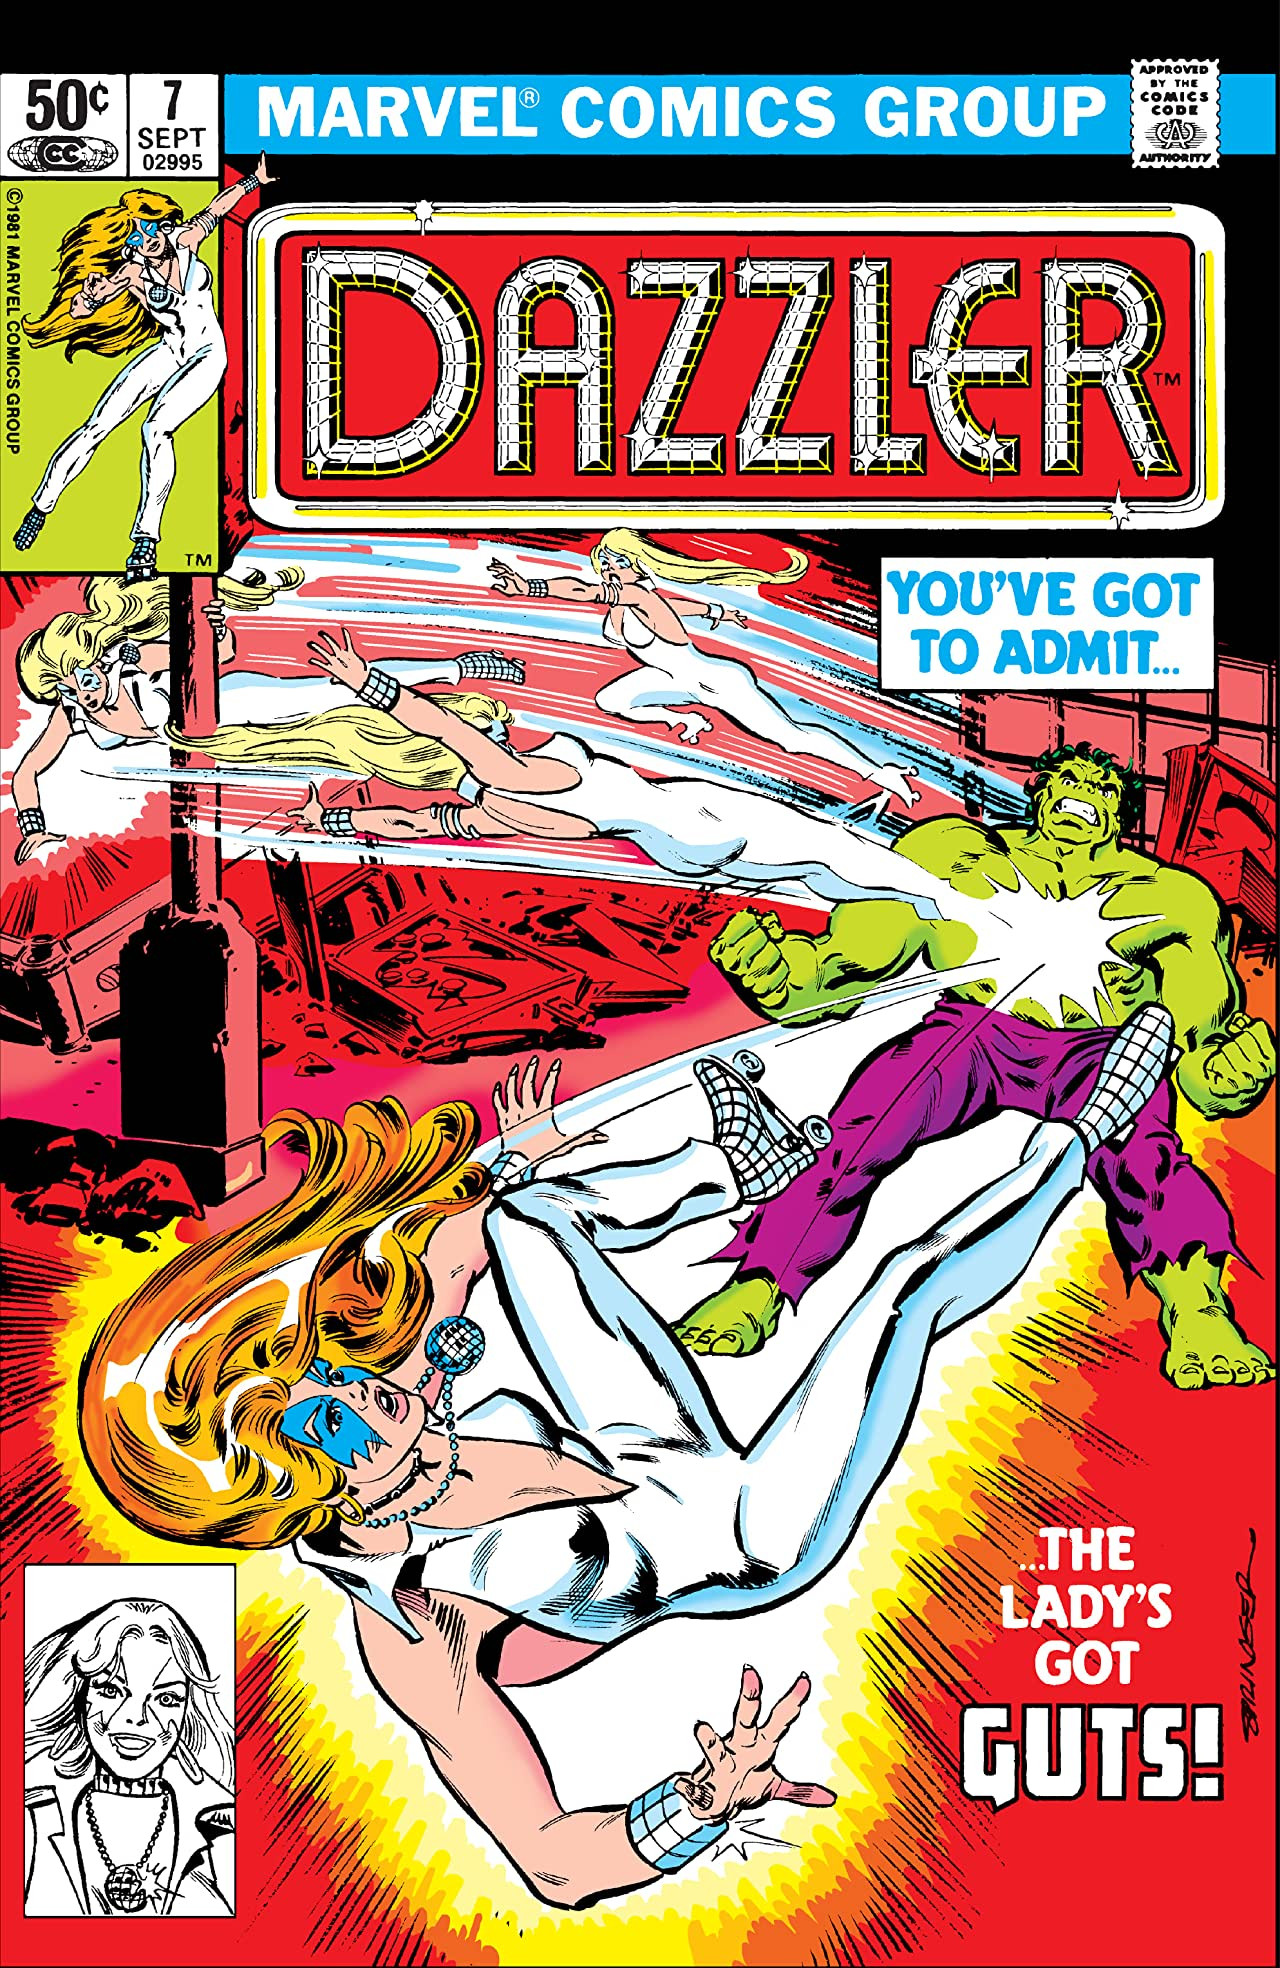 Dazzler (Marvel Comics) - Wikipedia